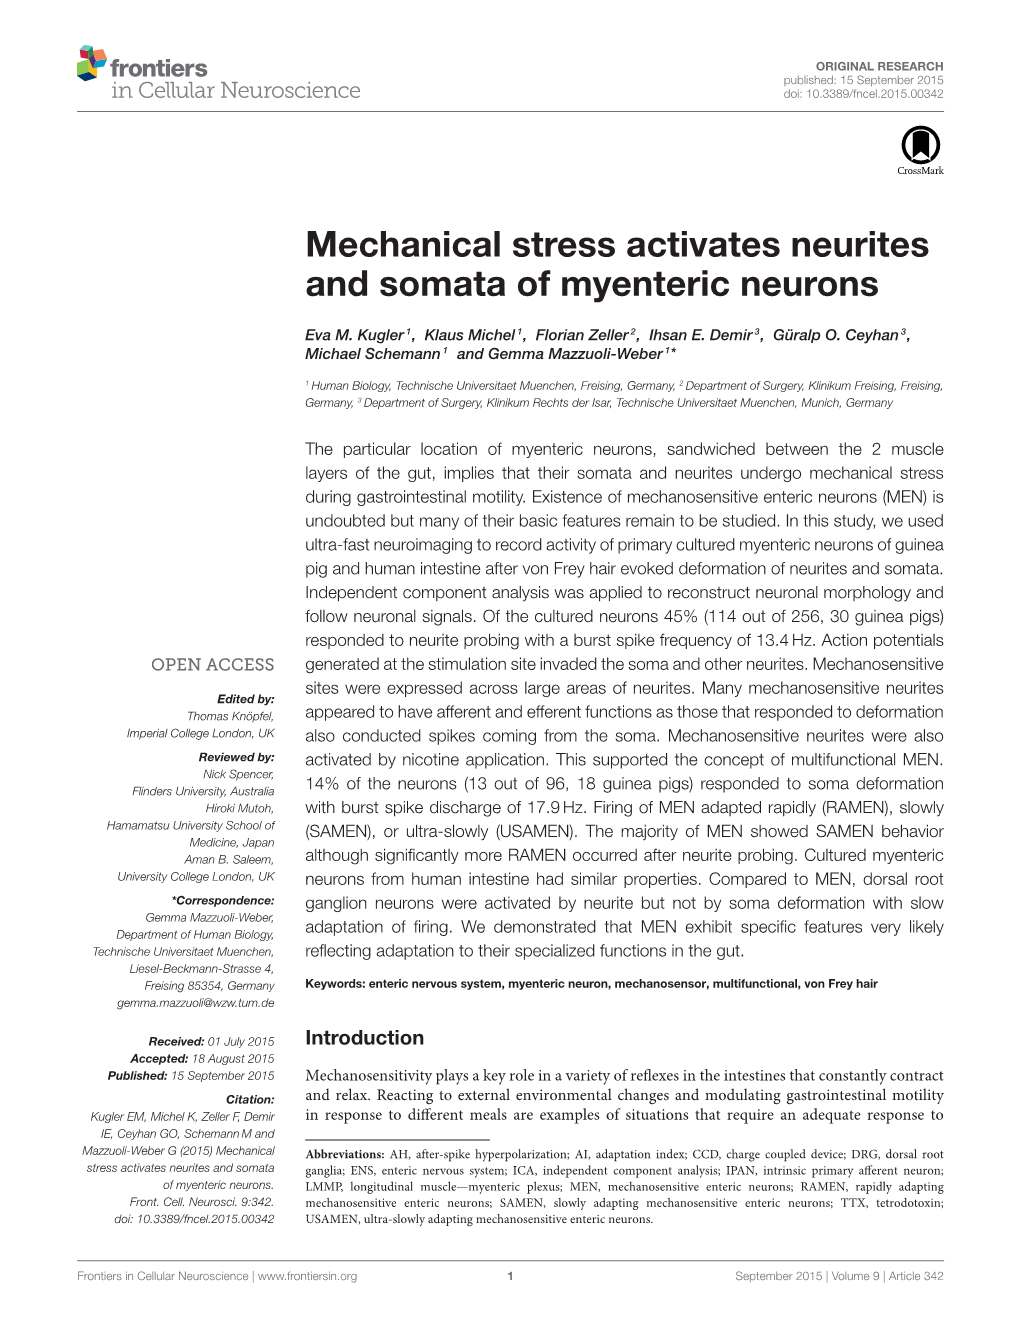 Mechanical Stress Activates Neurites and Somata of Myenteric Neurons